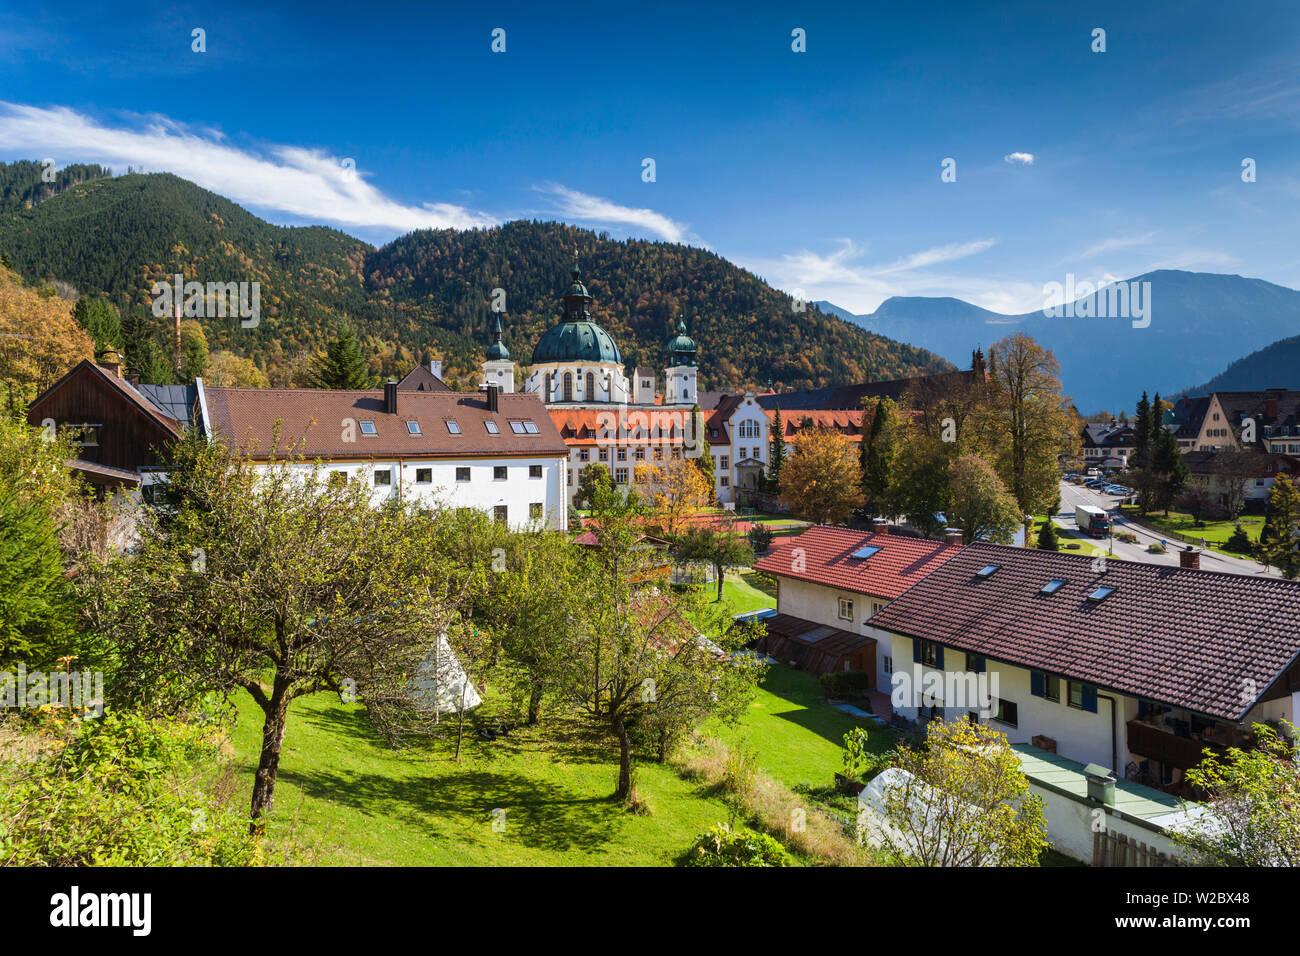 Germany, Bavaria, Ettal, Kloster Ettal monastery, exterior Stock Photo